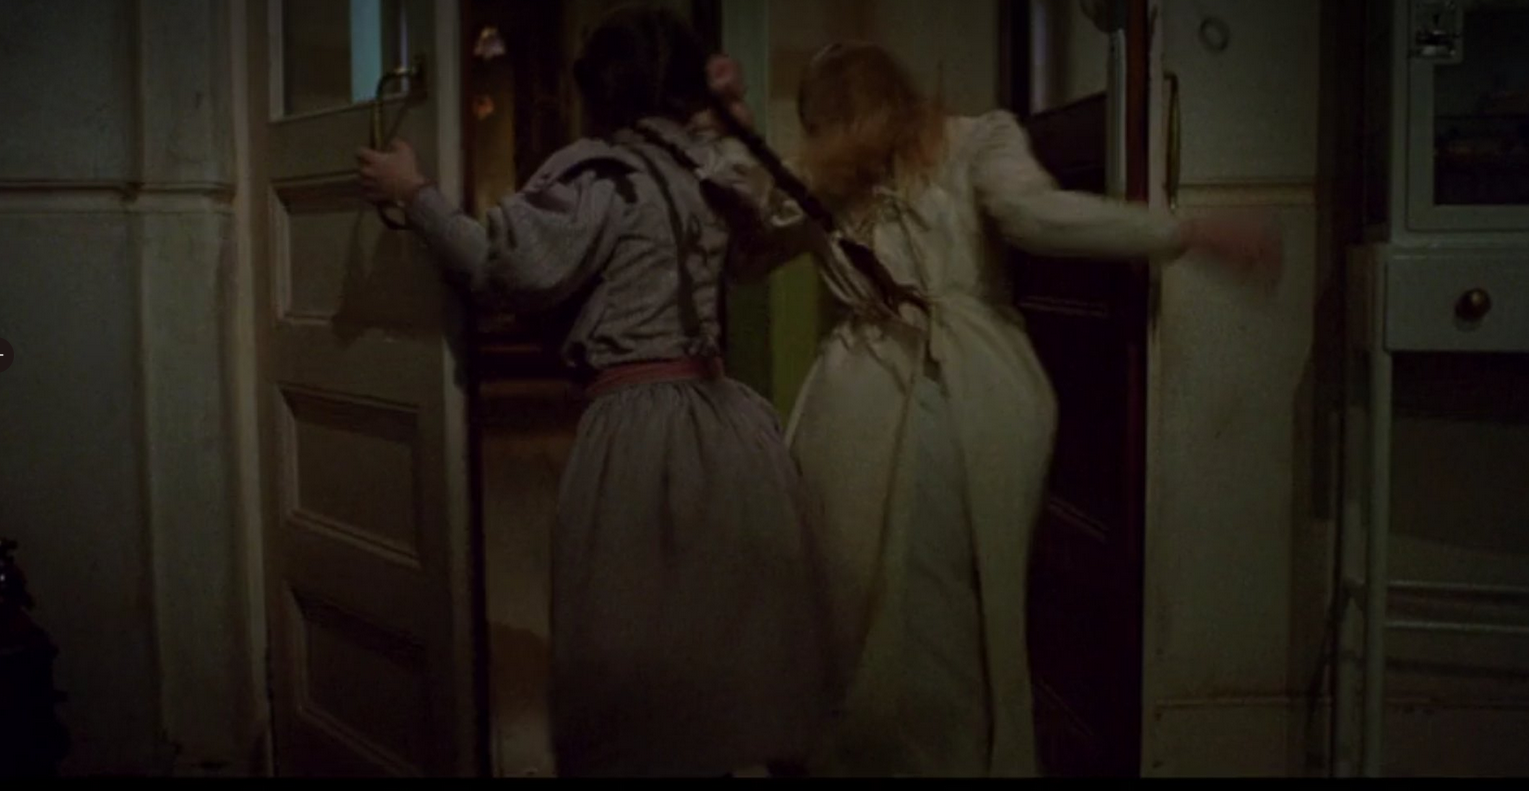 Ozma and Dorothy going through a door